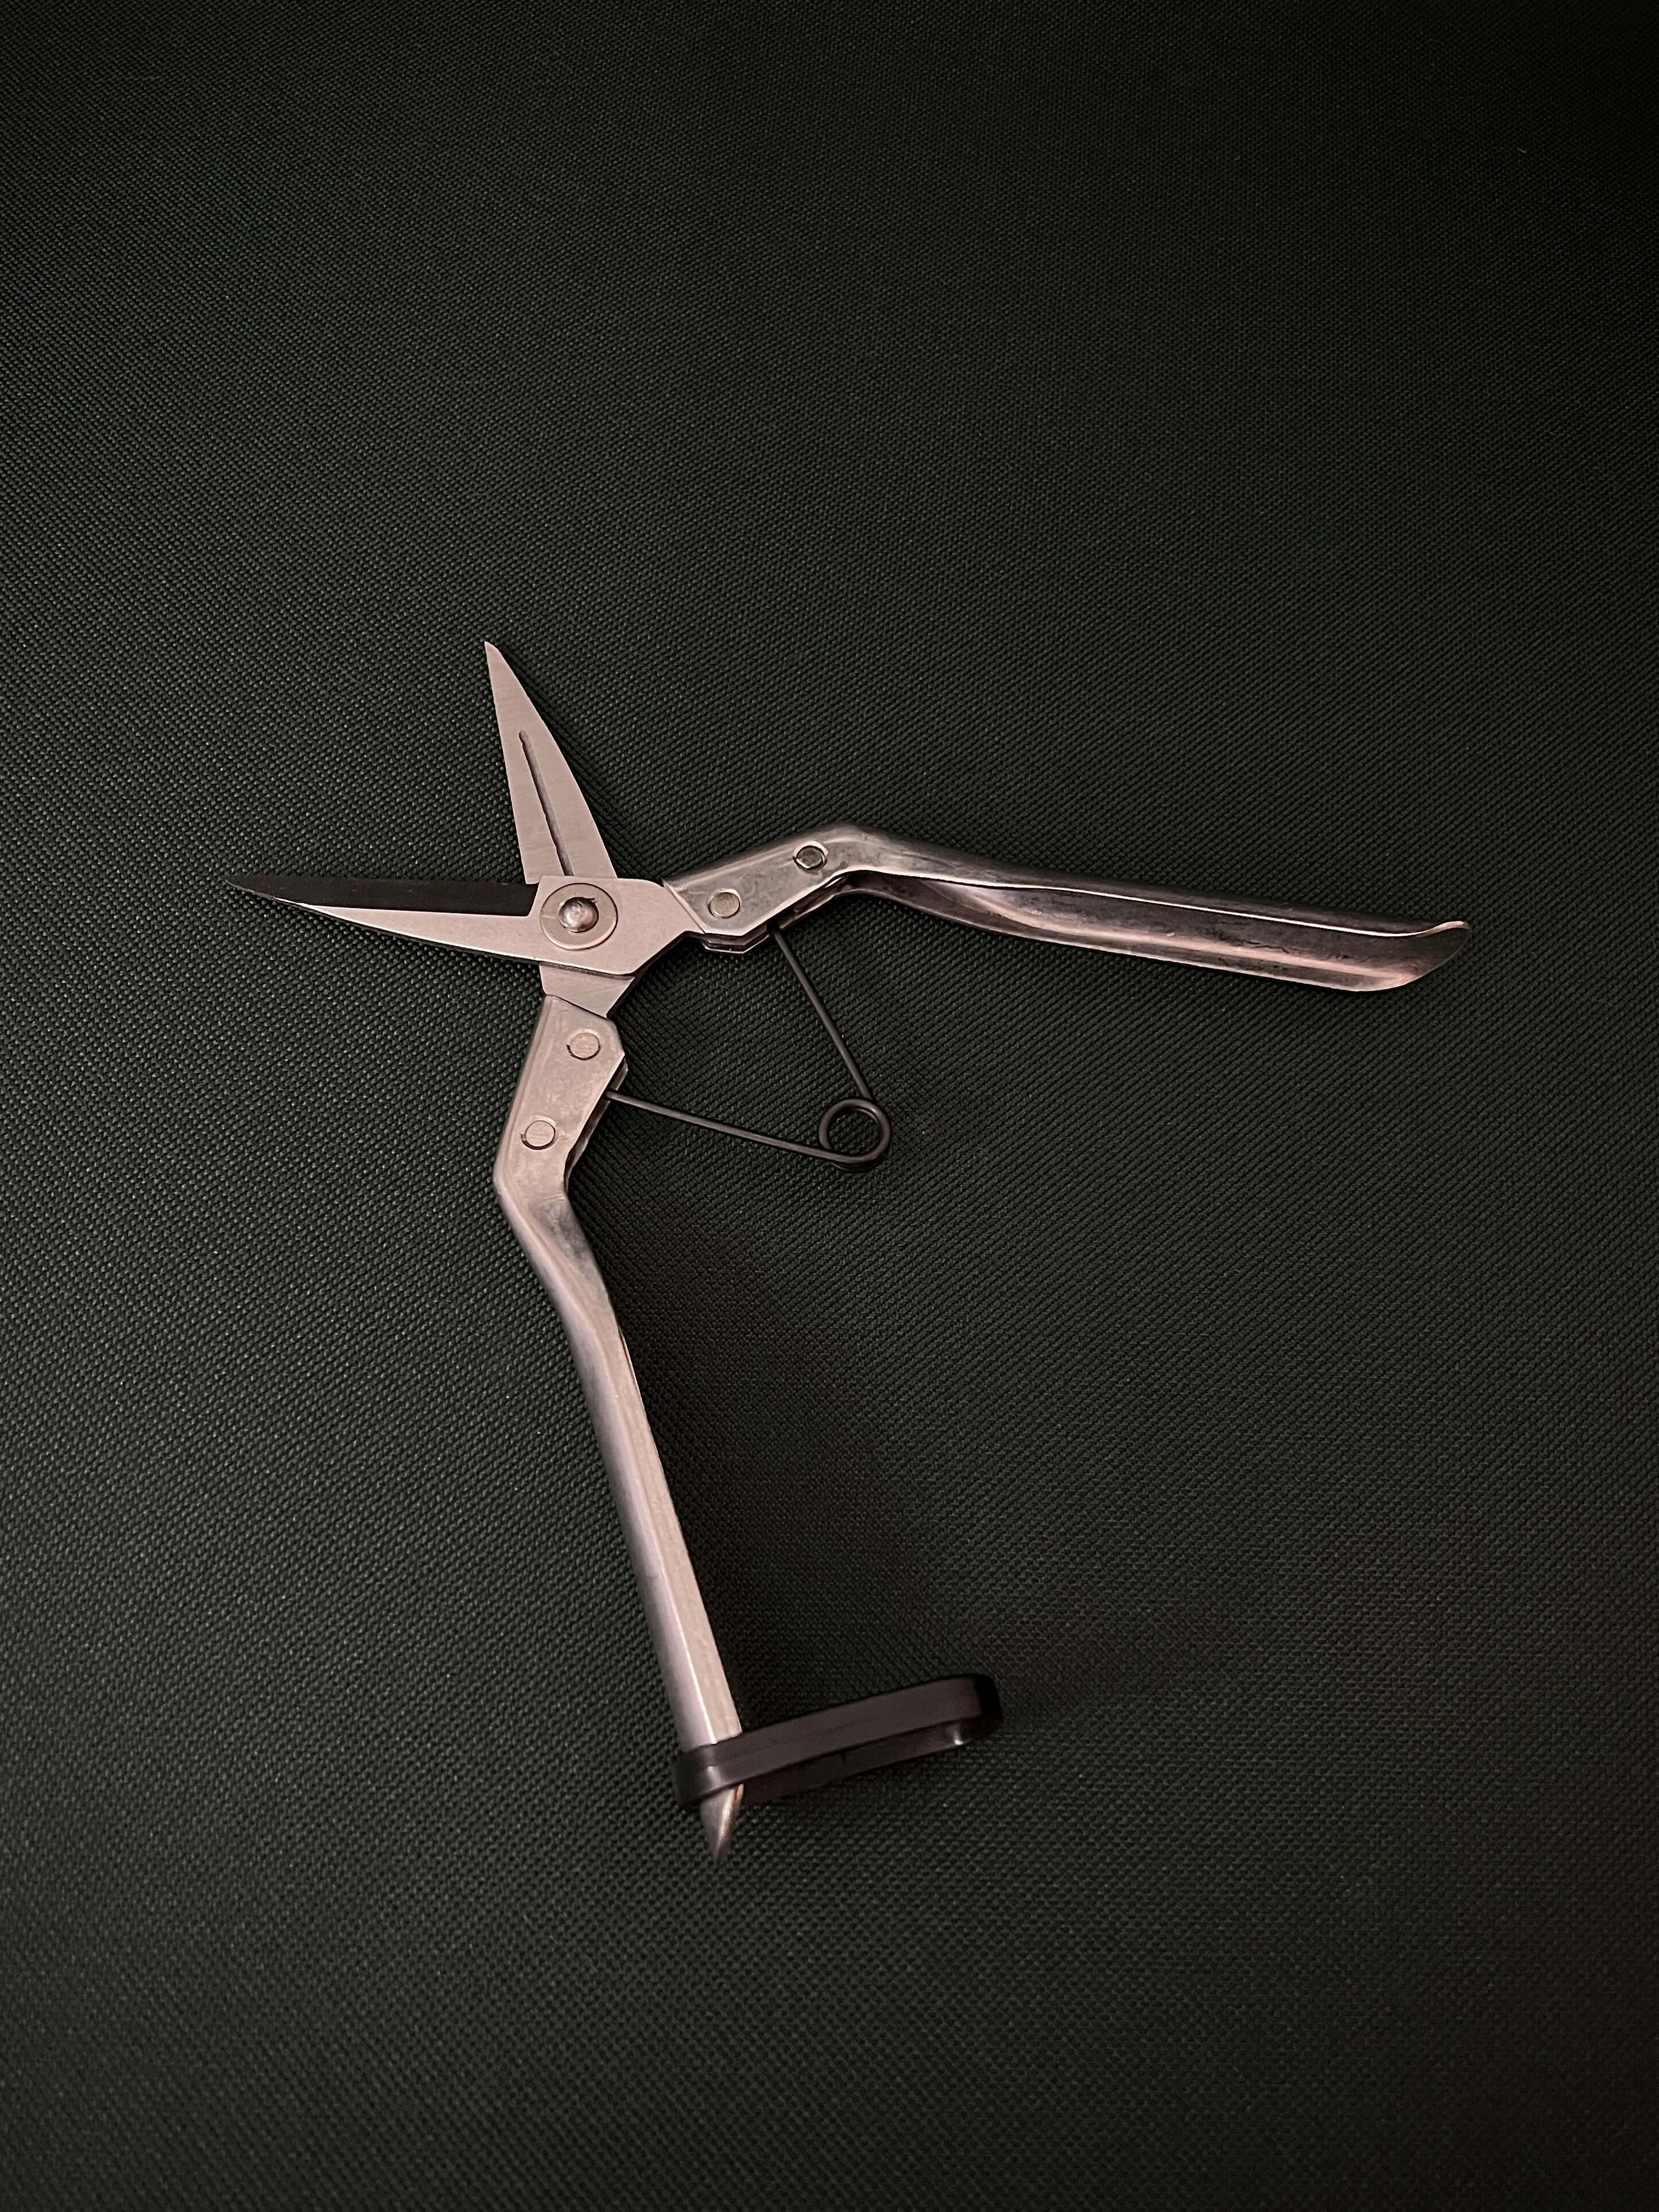 Pruning Scissors - Stainless Steel - SMUKHI